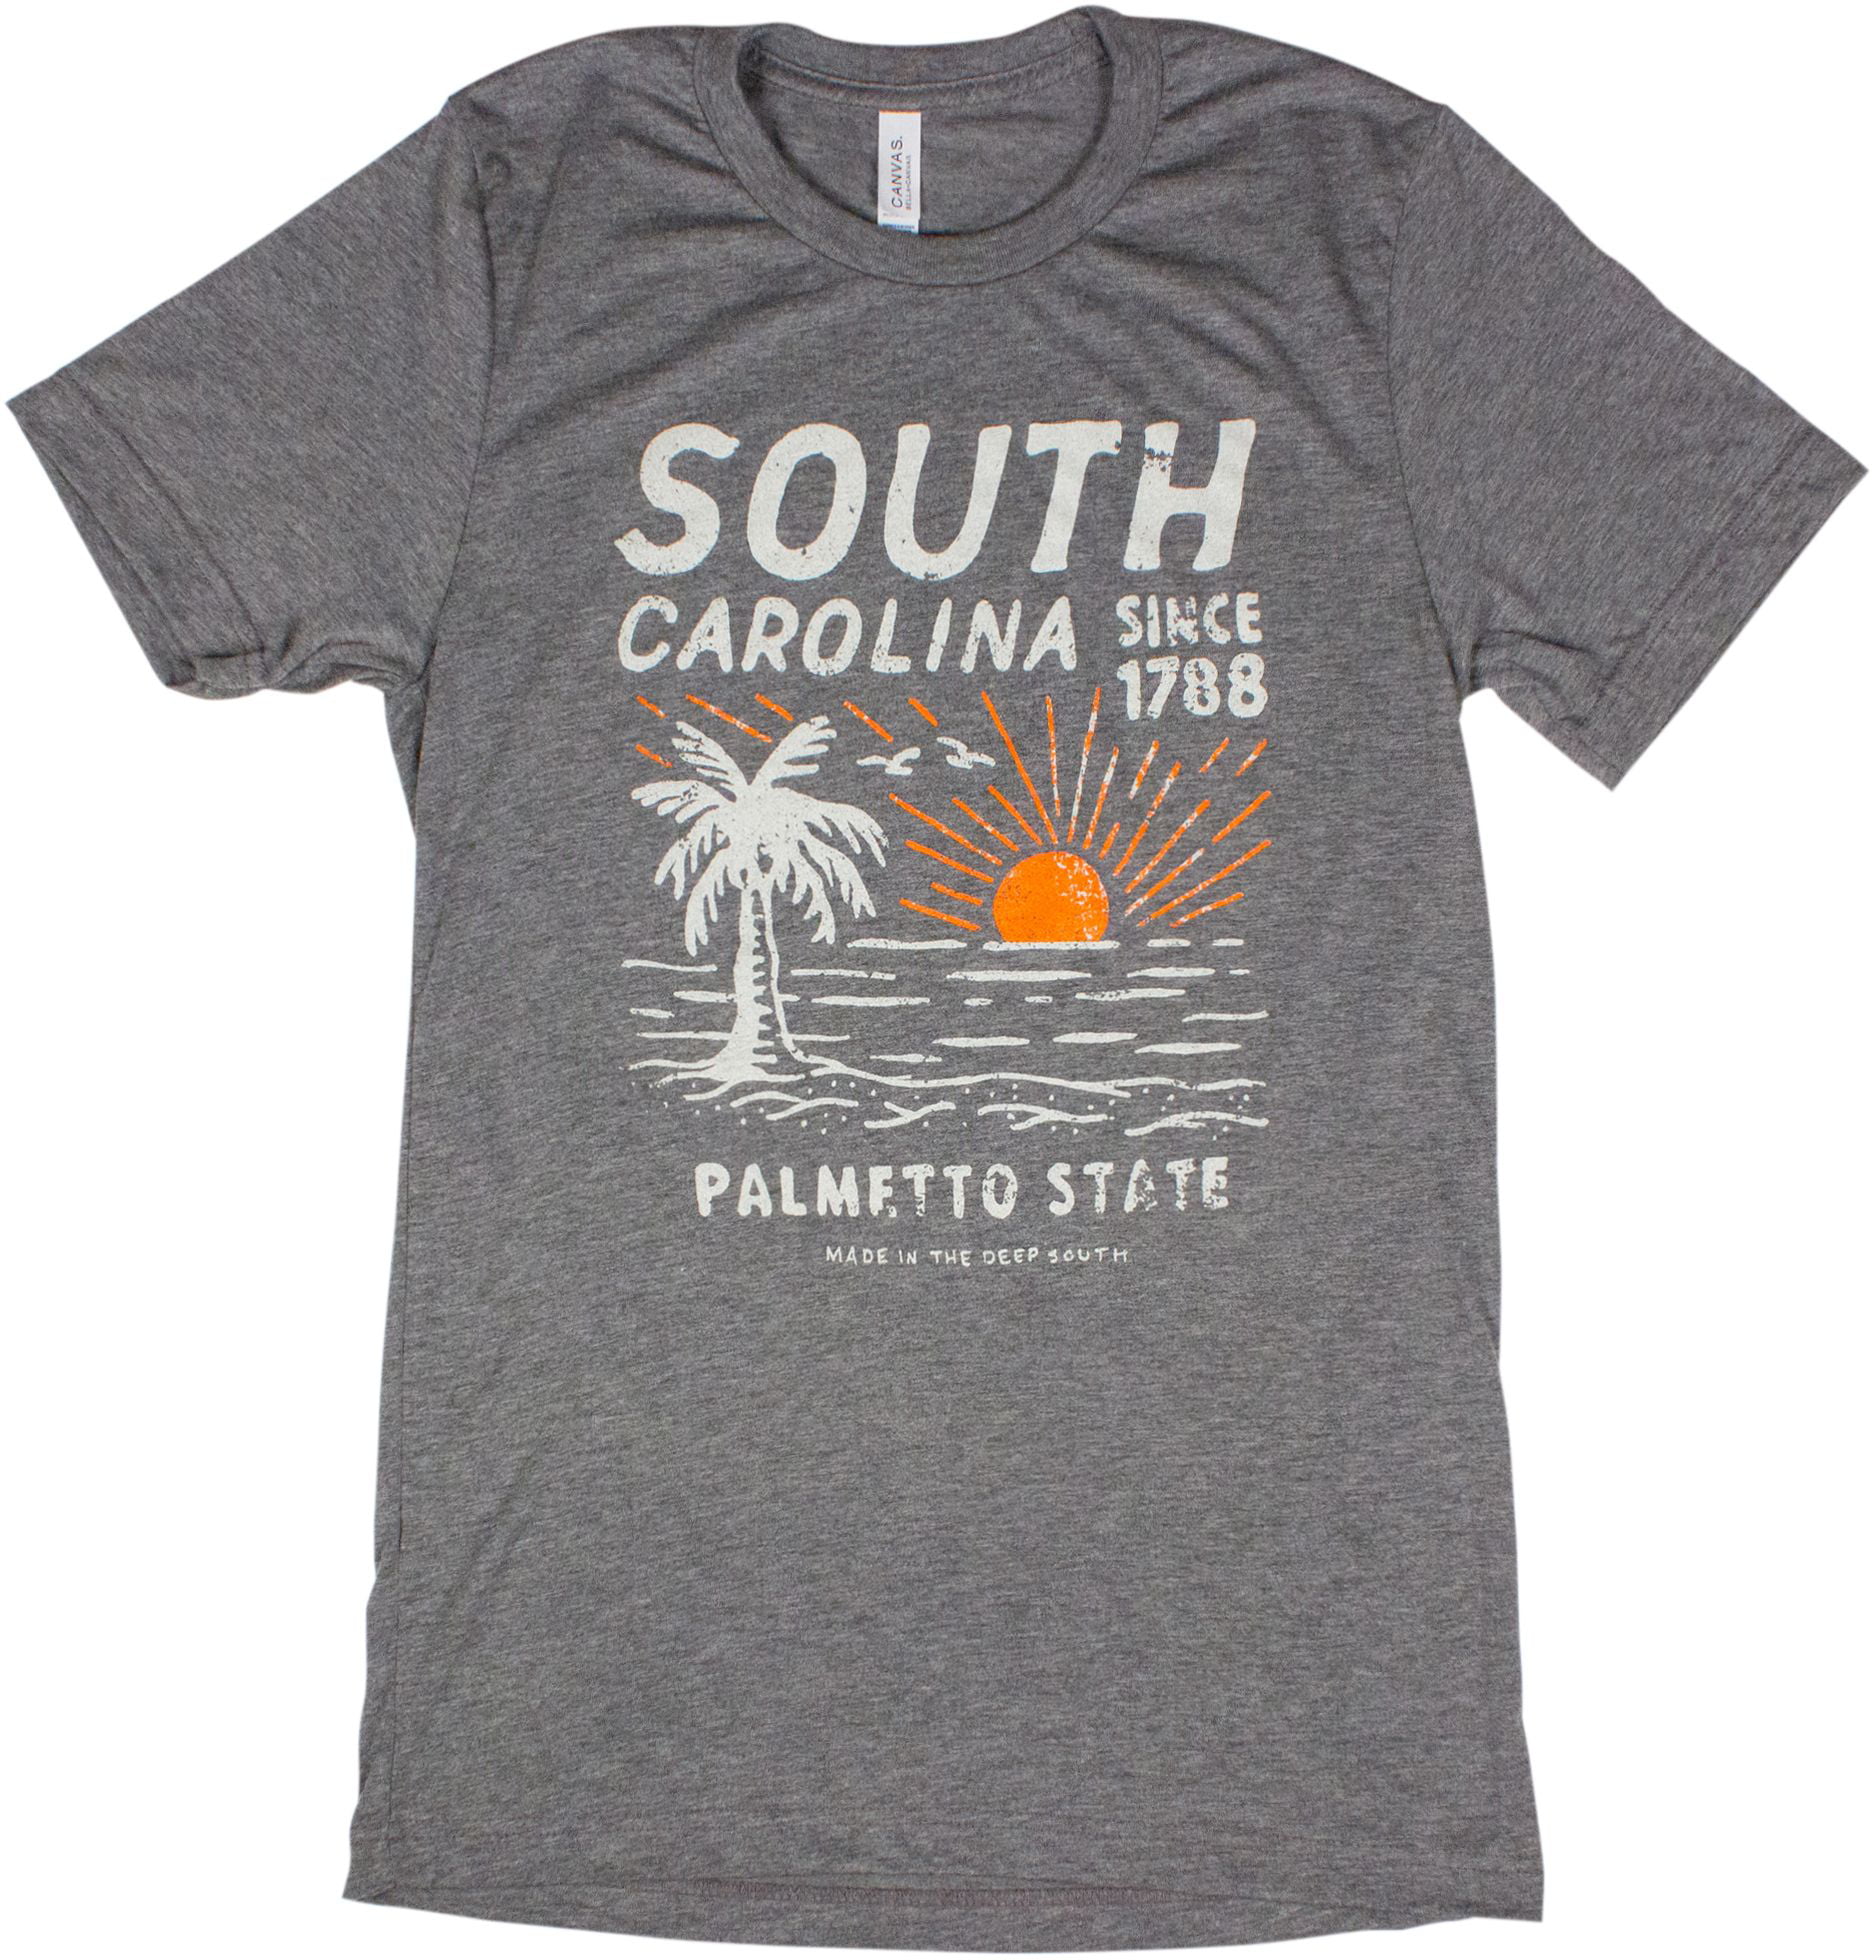 Home State Apparel - Home State Apparel Men's South Carolina Since 1788 ...